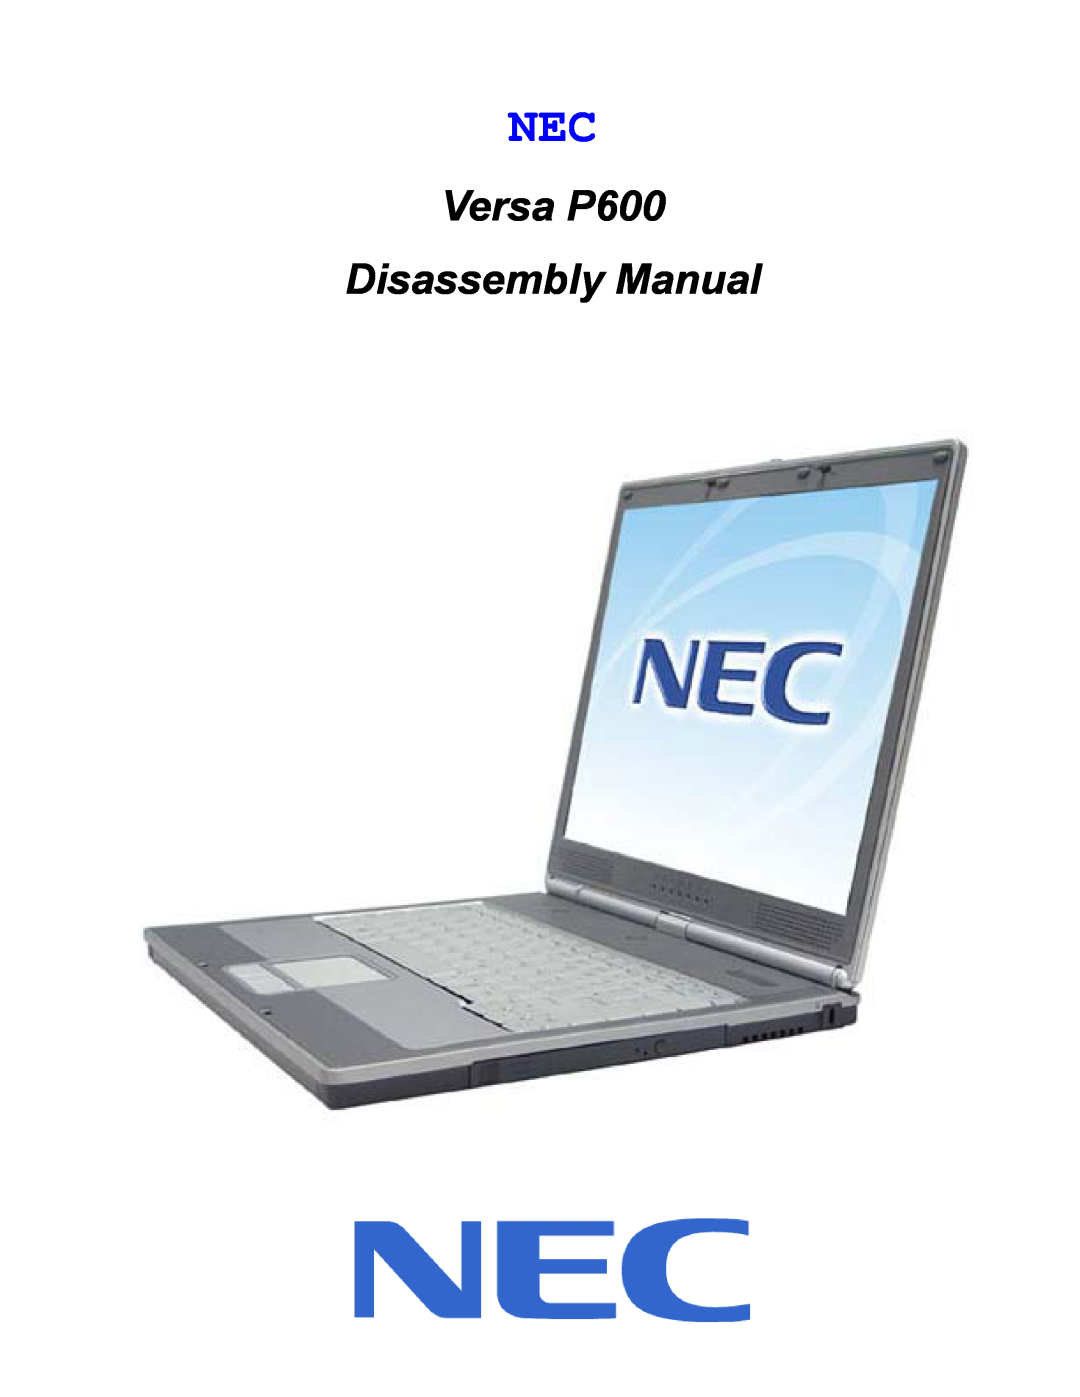 NEC manual Versa P600 Disassembly Manual 